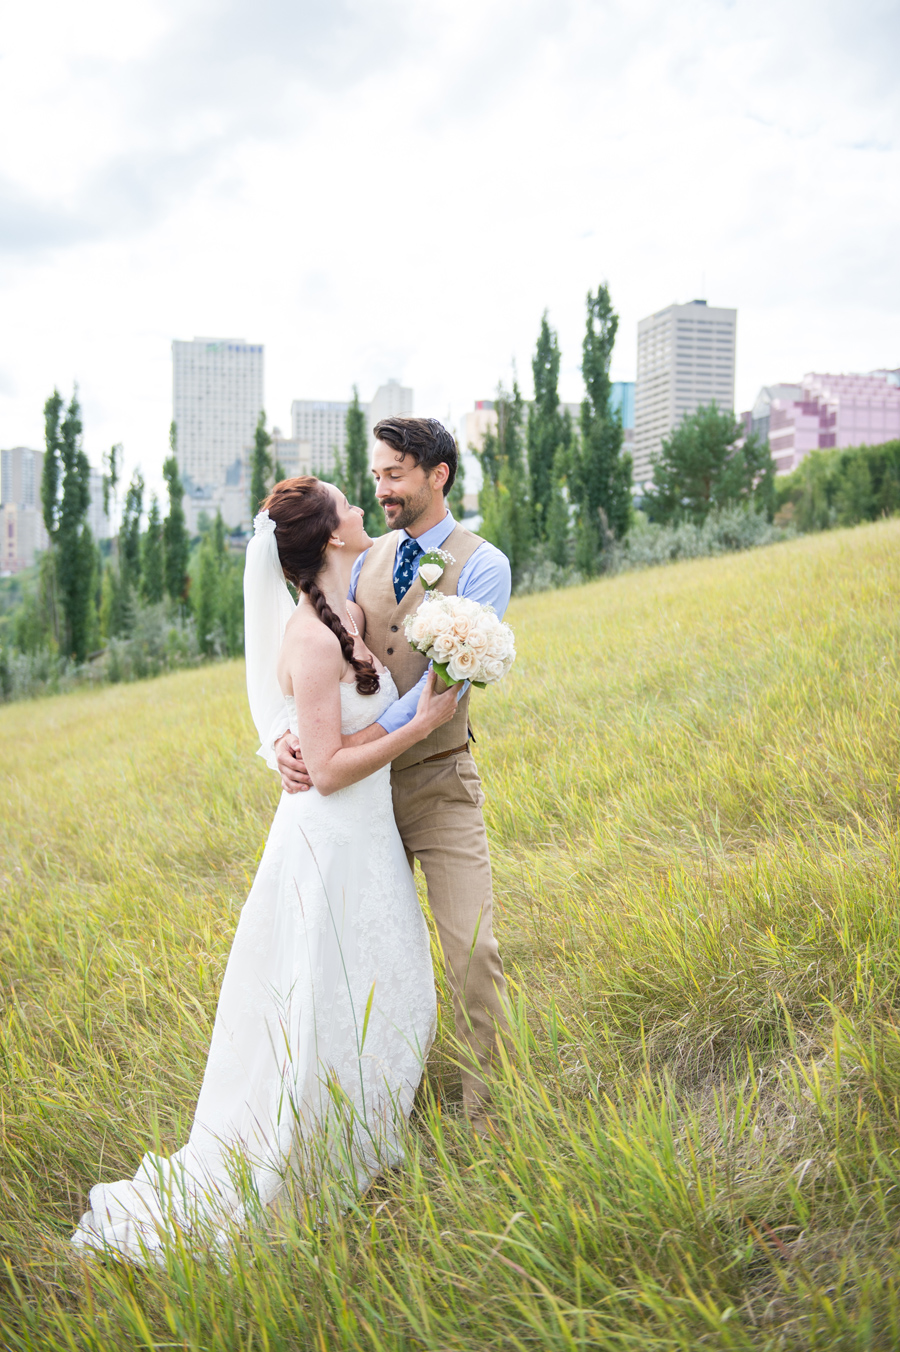 ERIN-SWEET-PHOTOGRAPHY-EDMONTON-ROMANTIC-WEDDING-LOUISE-MCKINNEY-PARK-PHOTOS011